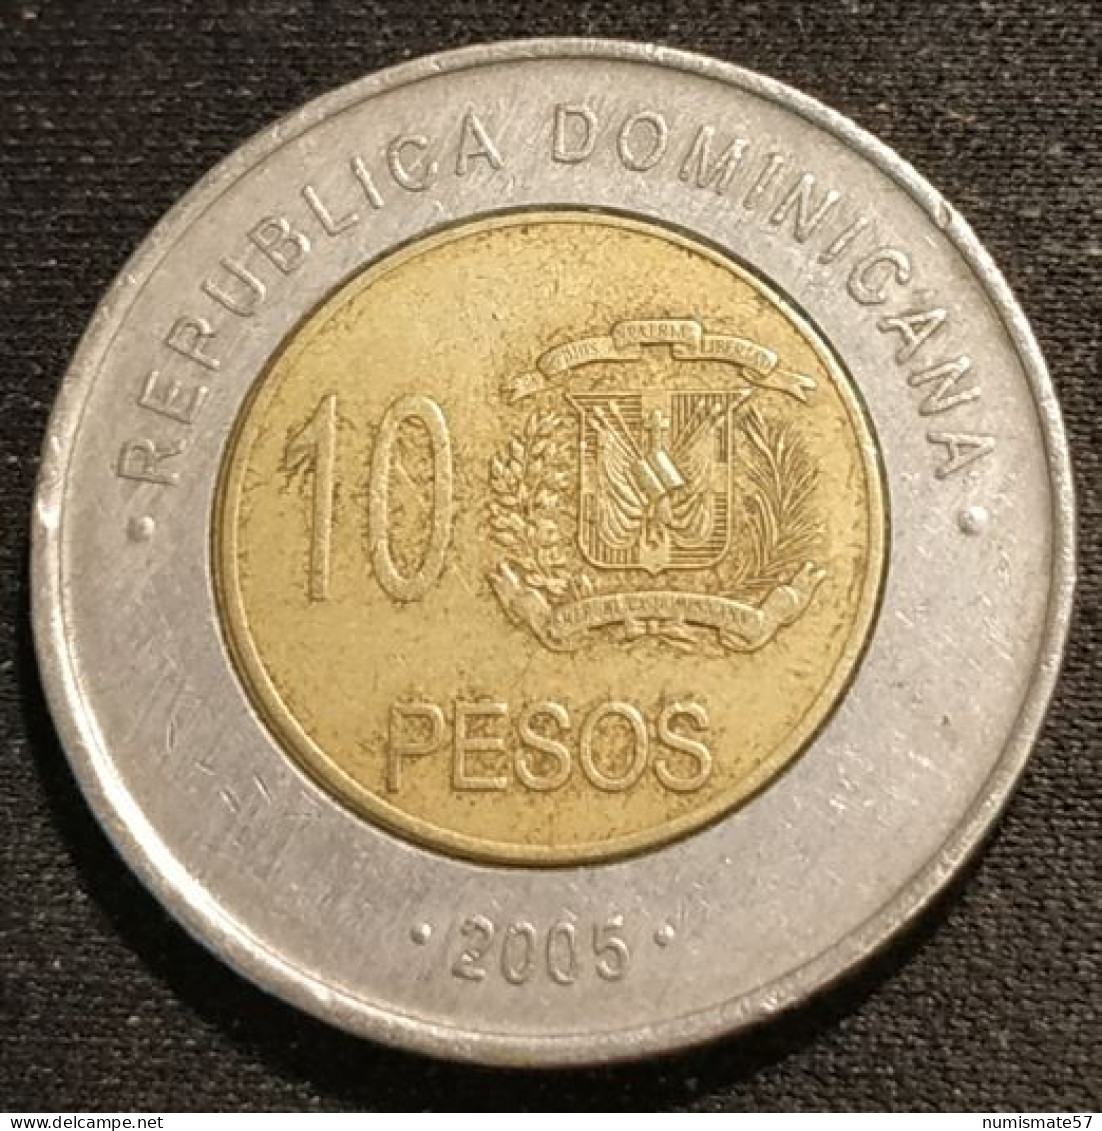 REPUBLIQUE DOMINICAINE - 10 PESOS 2005 - Matías Ramón Mella - KM 106 - Dominicaine